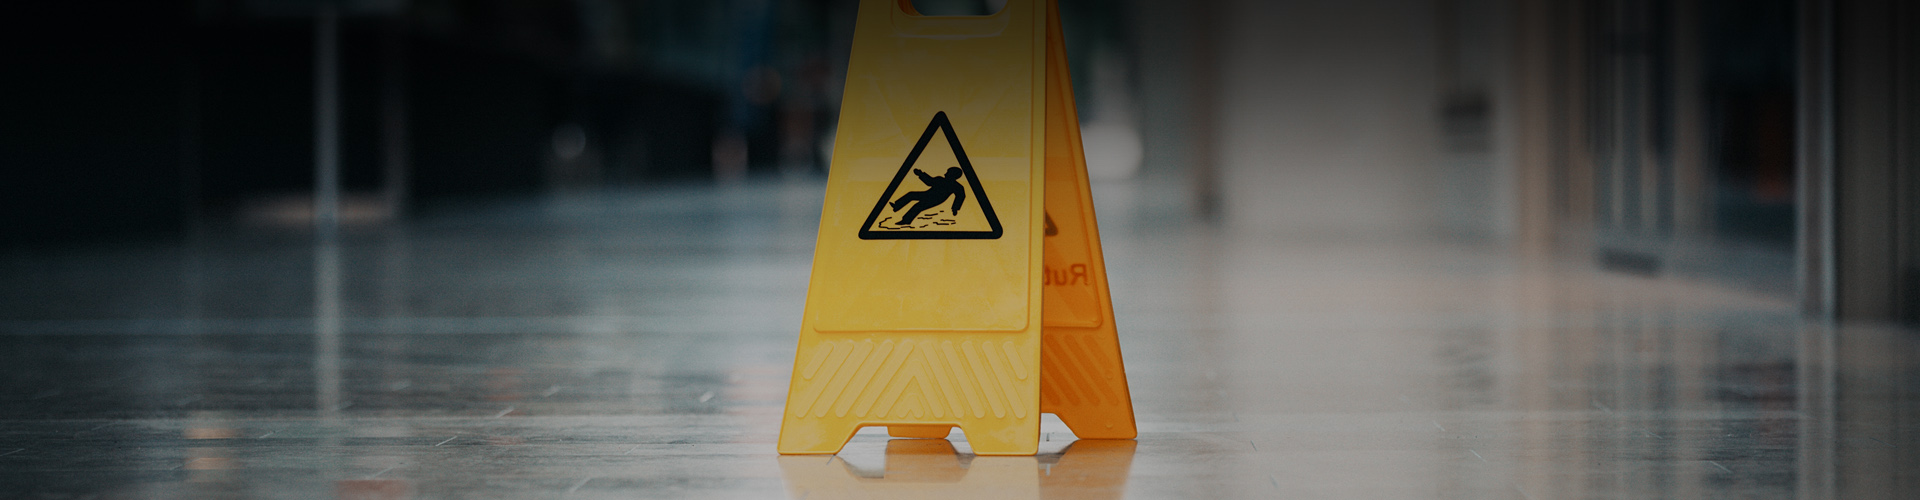 Header photo of a slippery floor warning sign